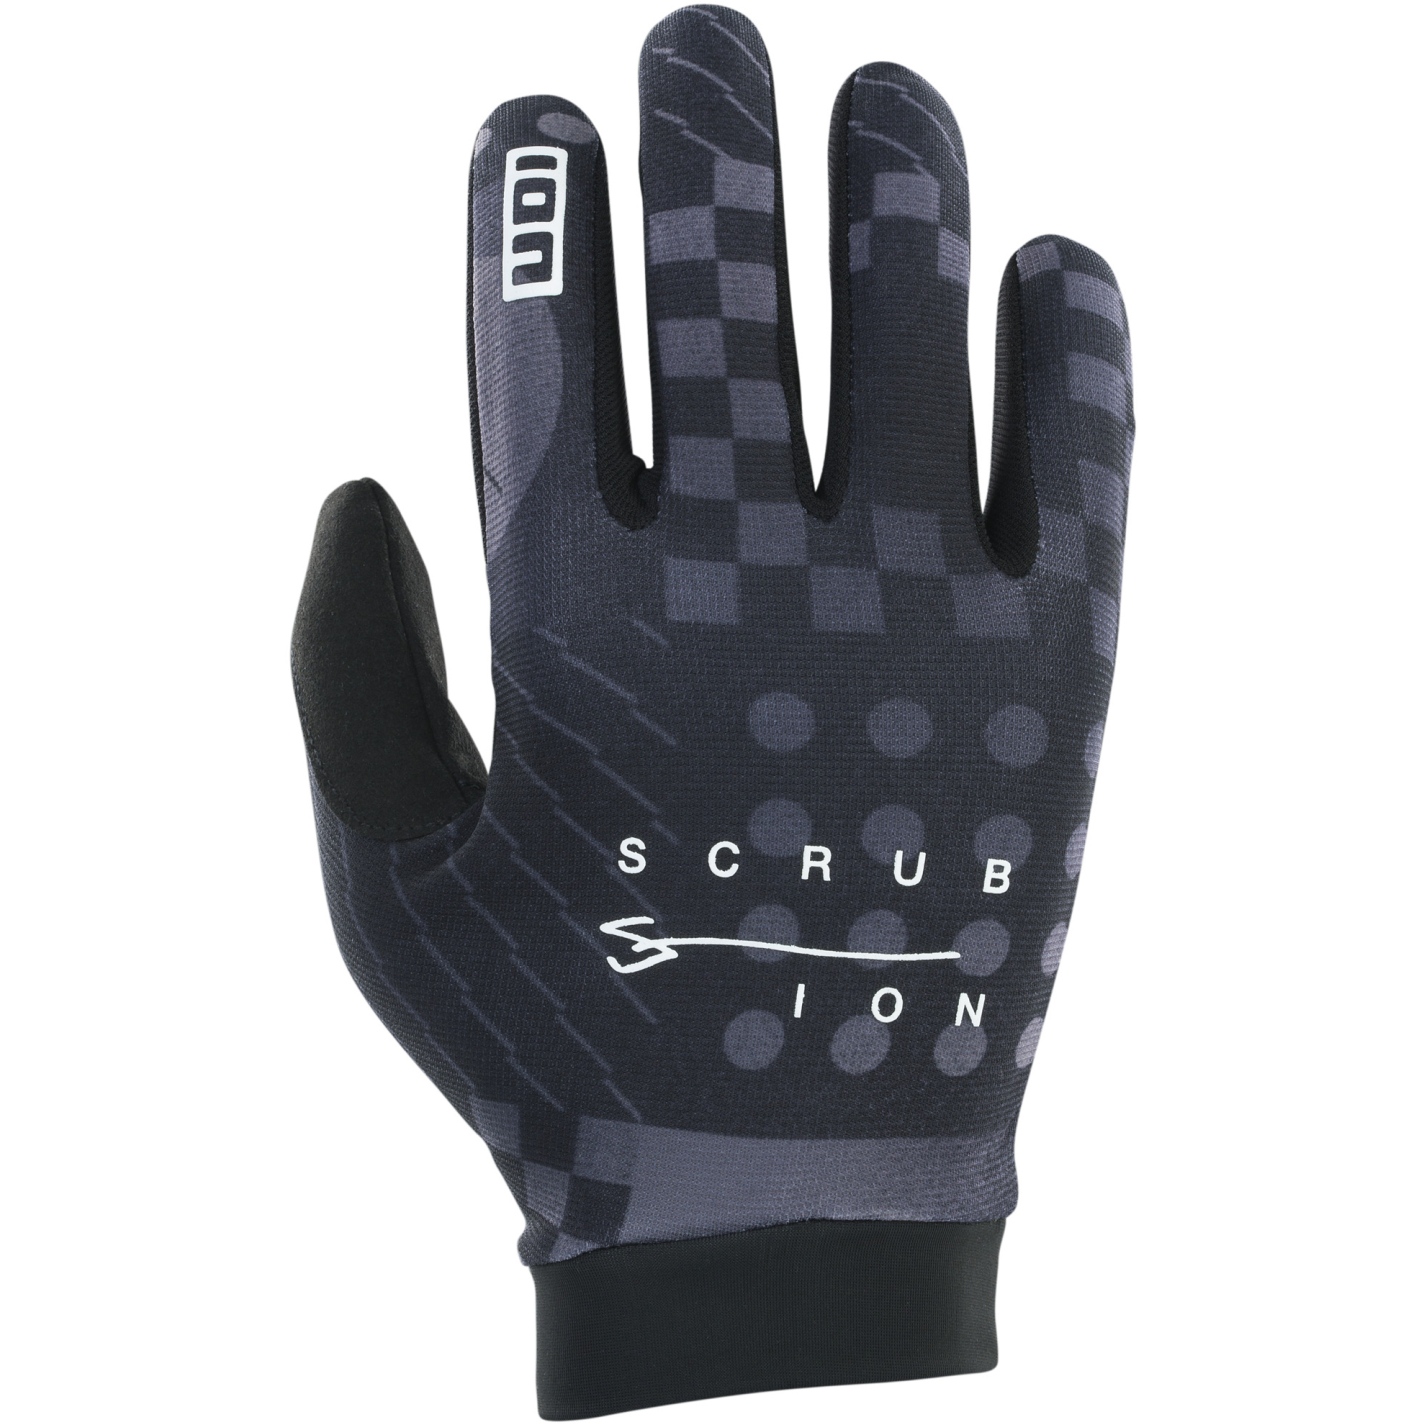 Image of ION Bike Gloves Scrub - Black 47230